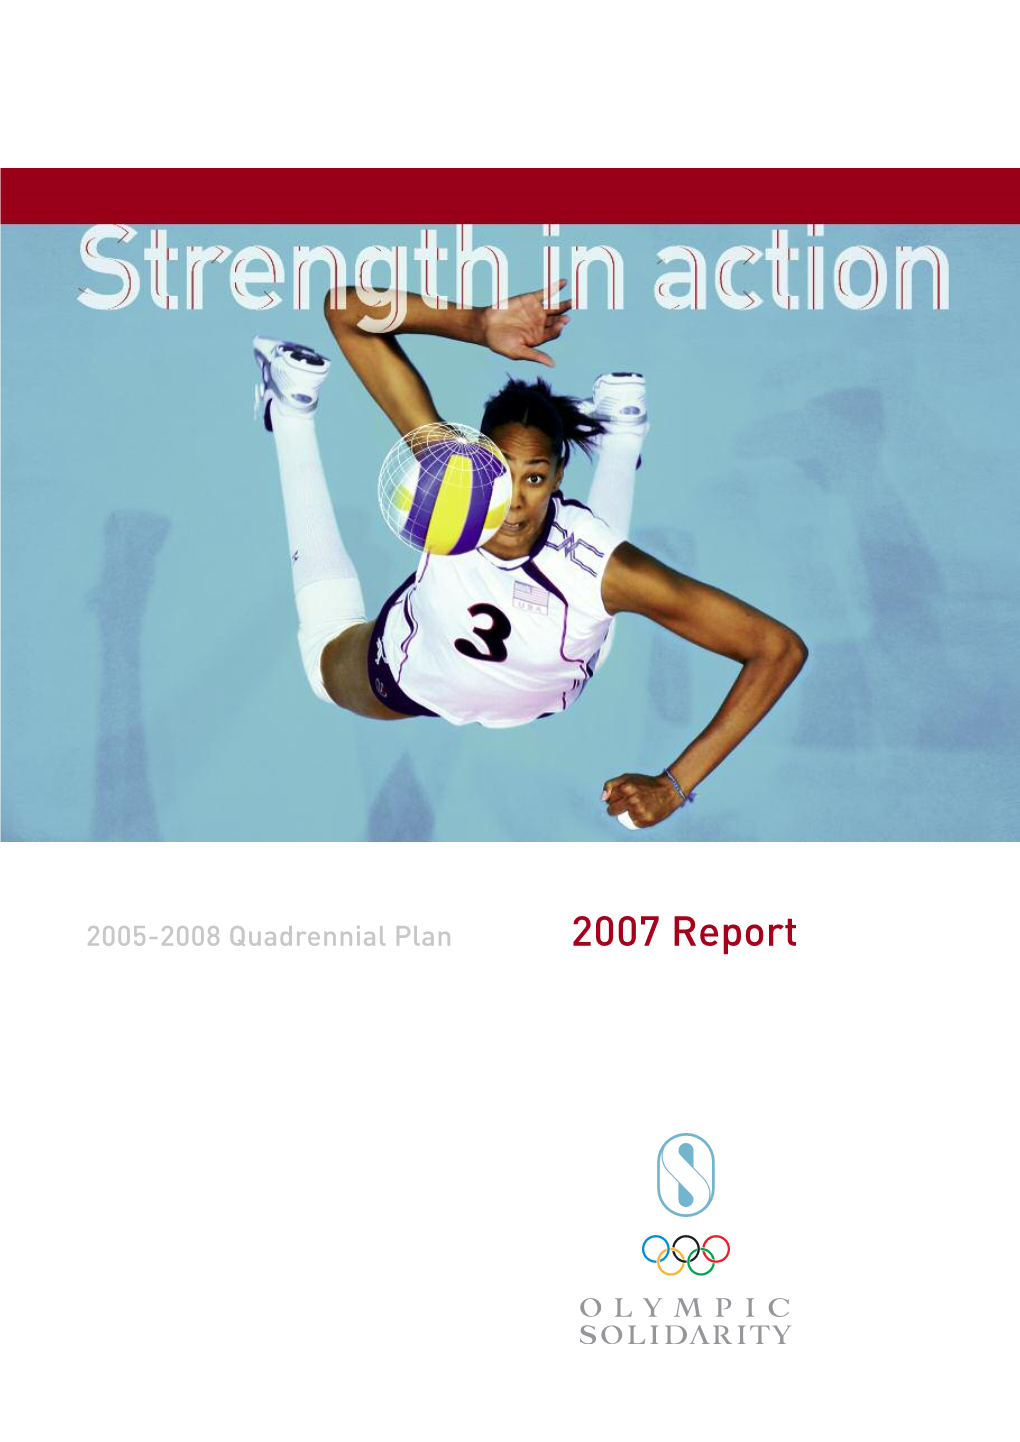 2007 Report Contents